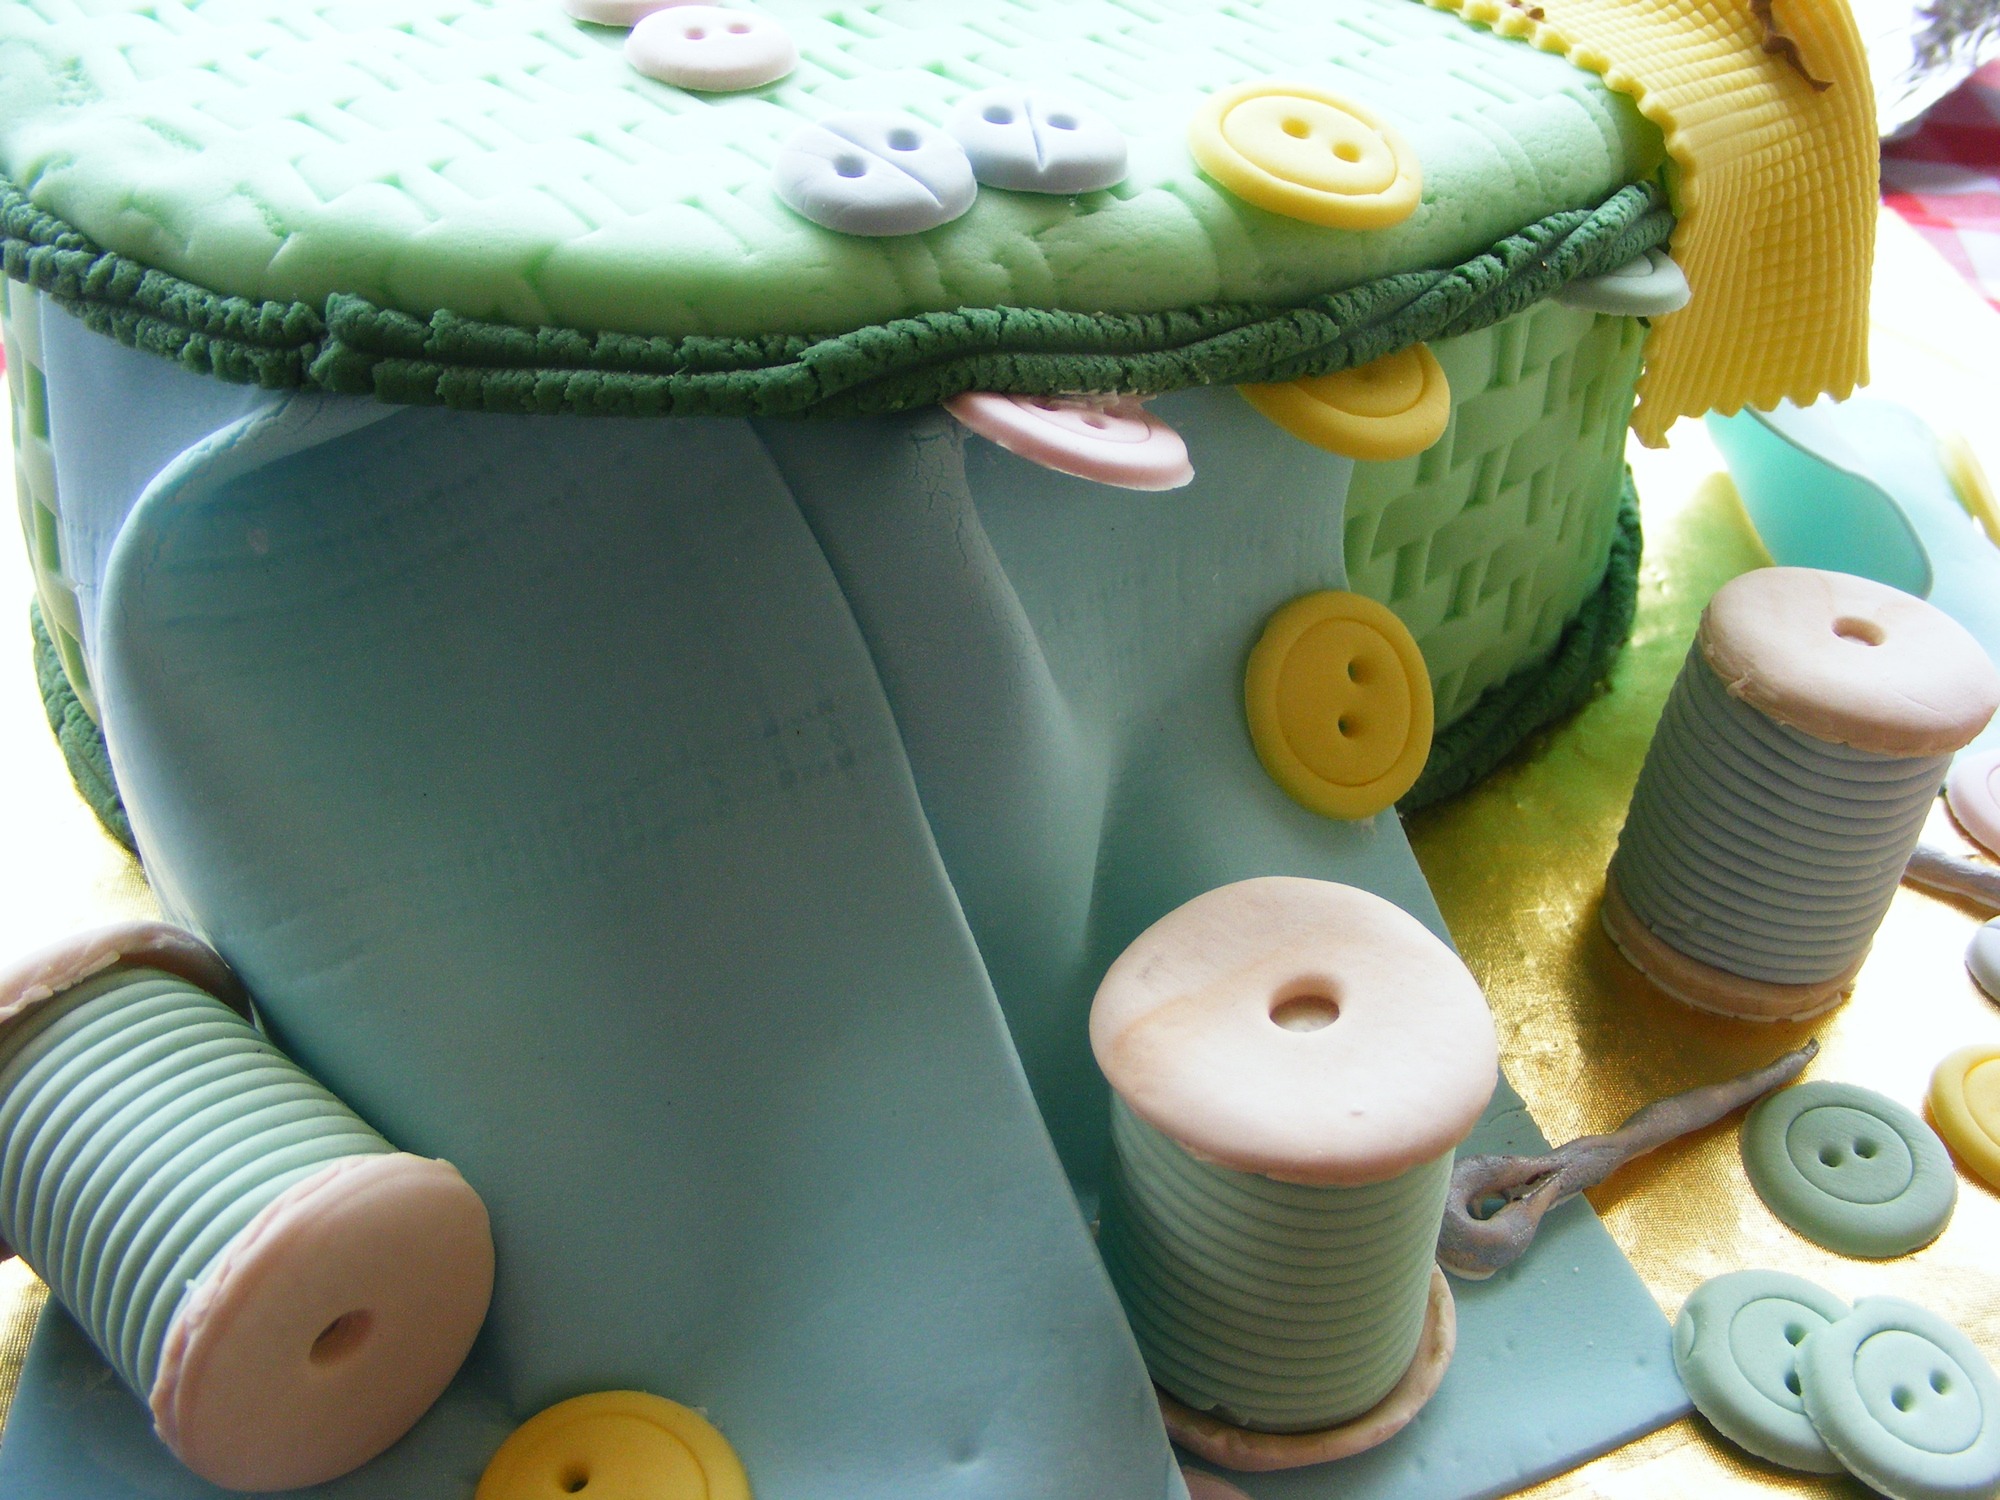 Fondant-covered cake sewing kit